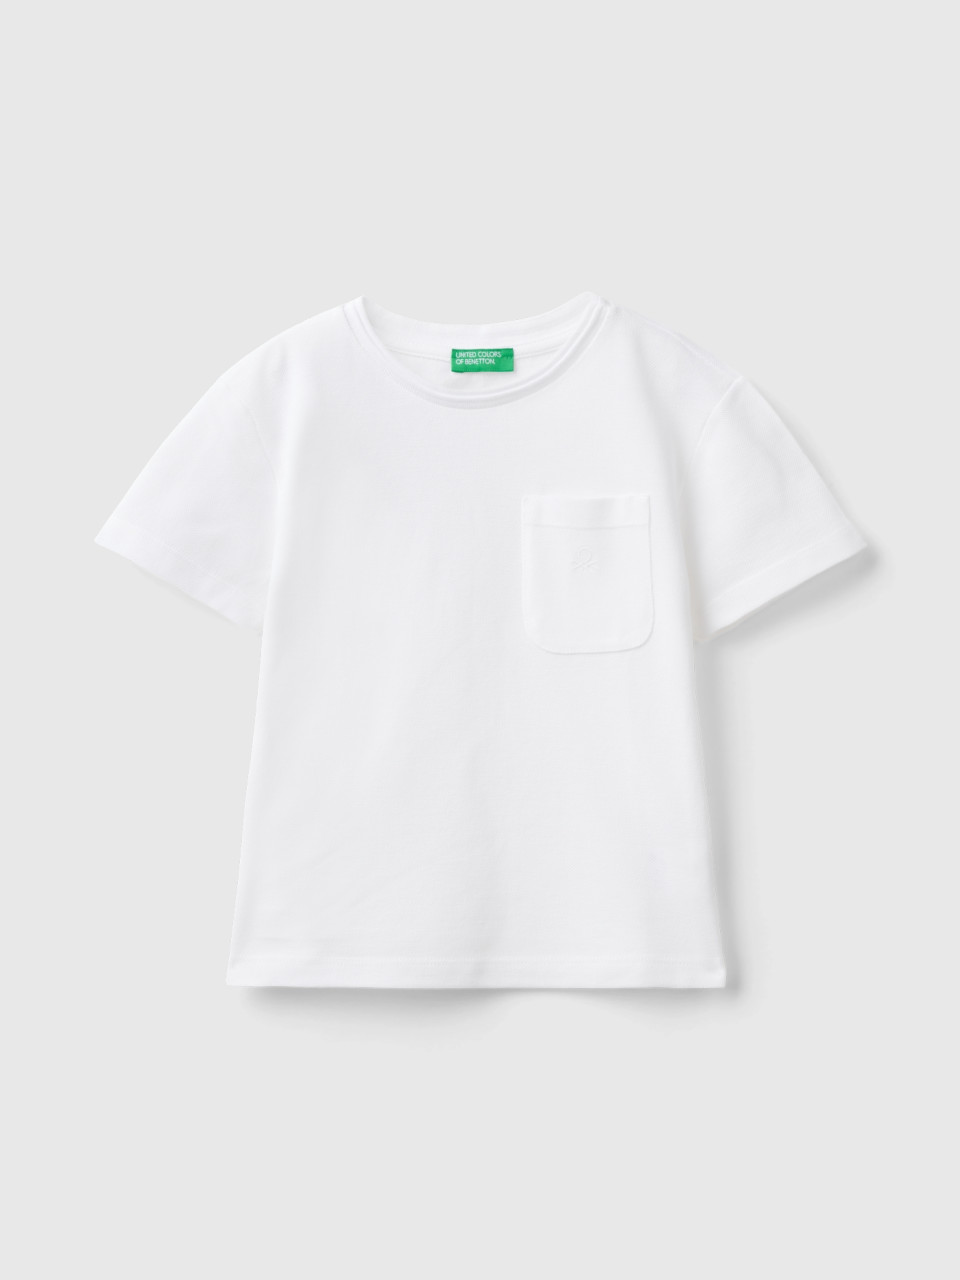 Benetton, T-shirt With Pocket, White, Kids